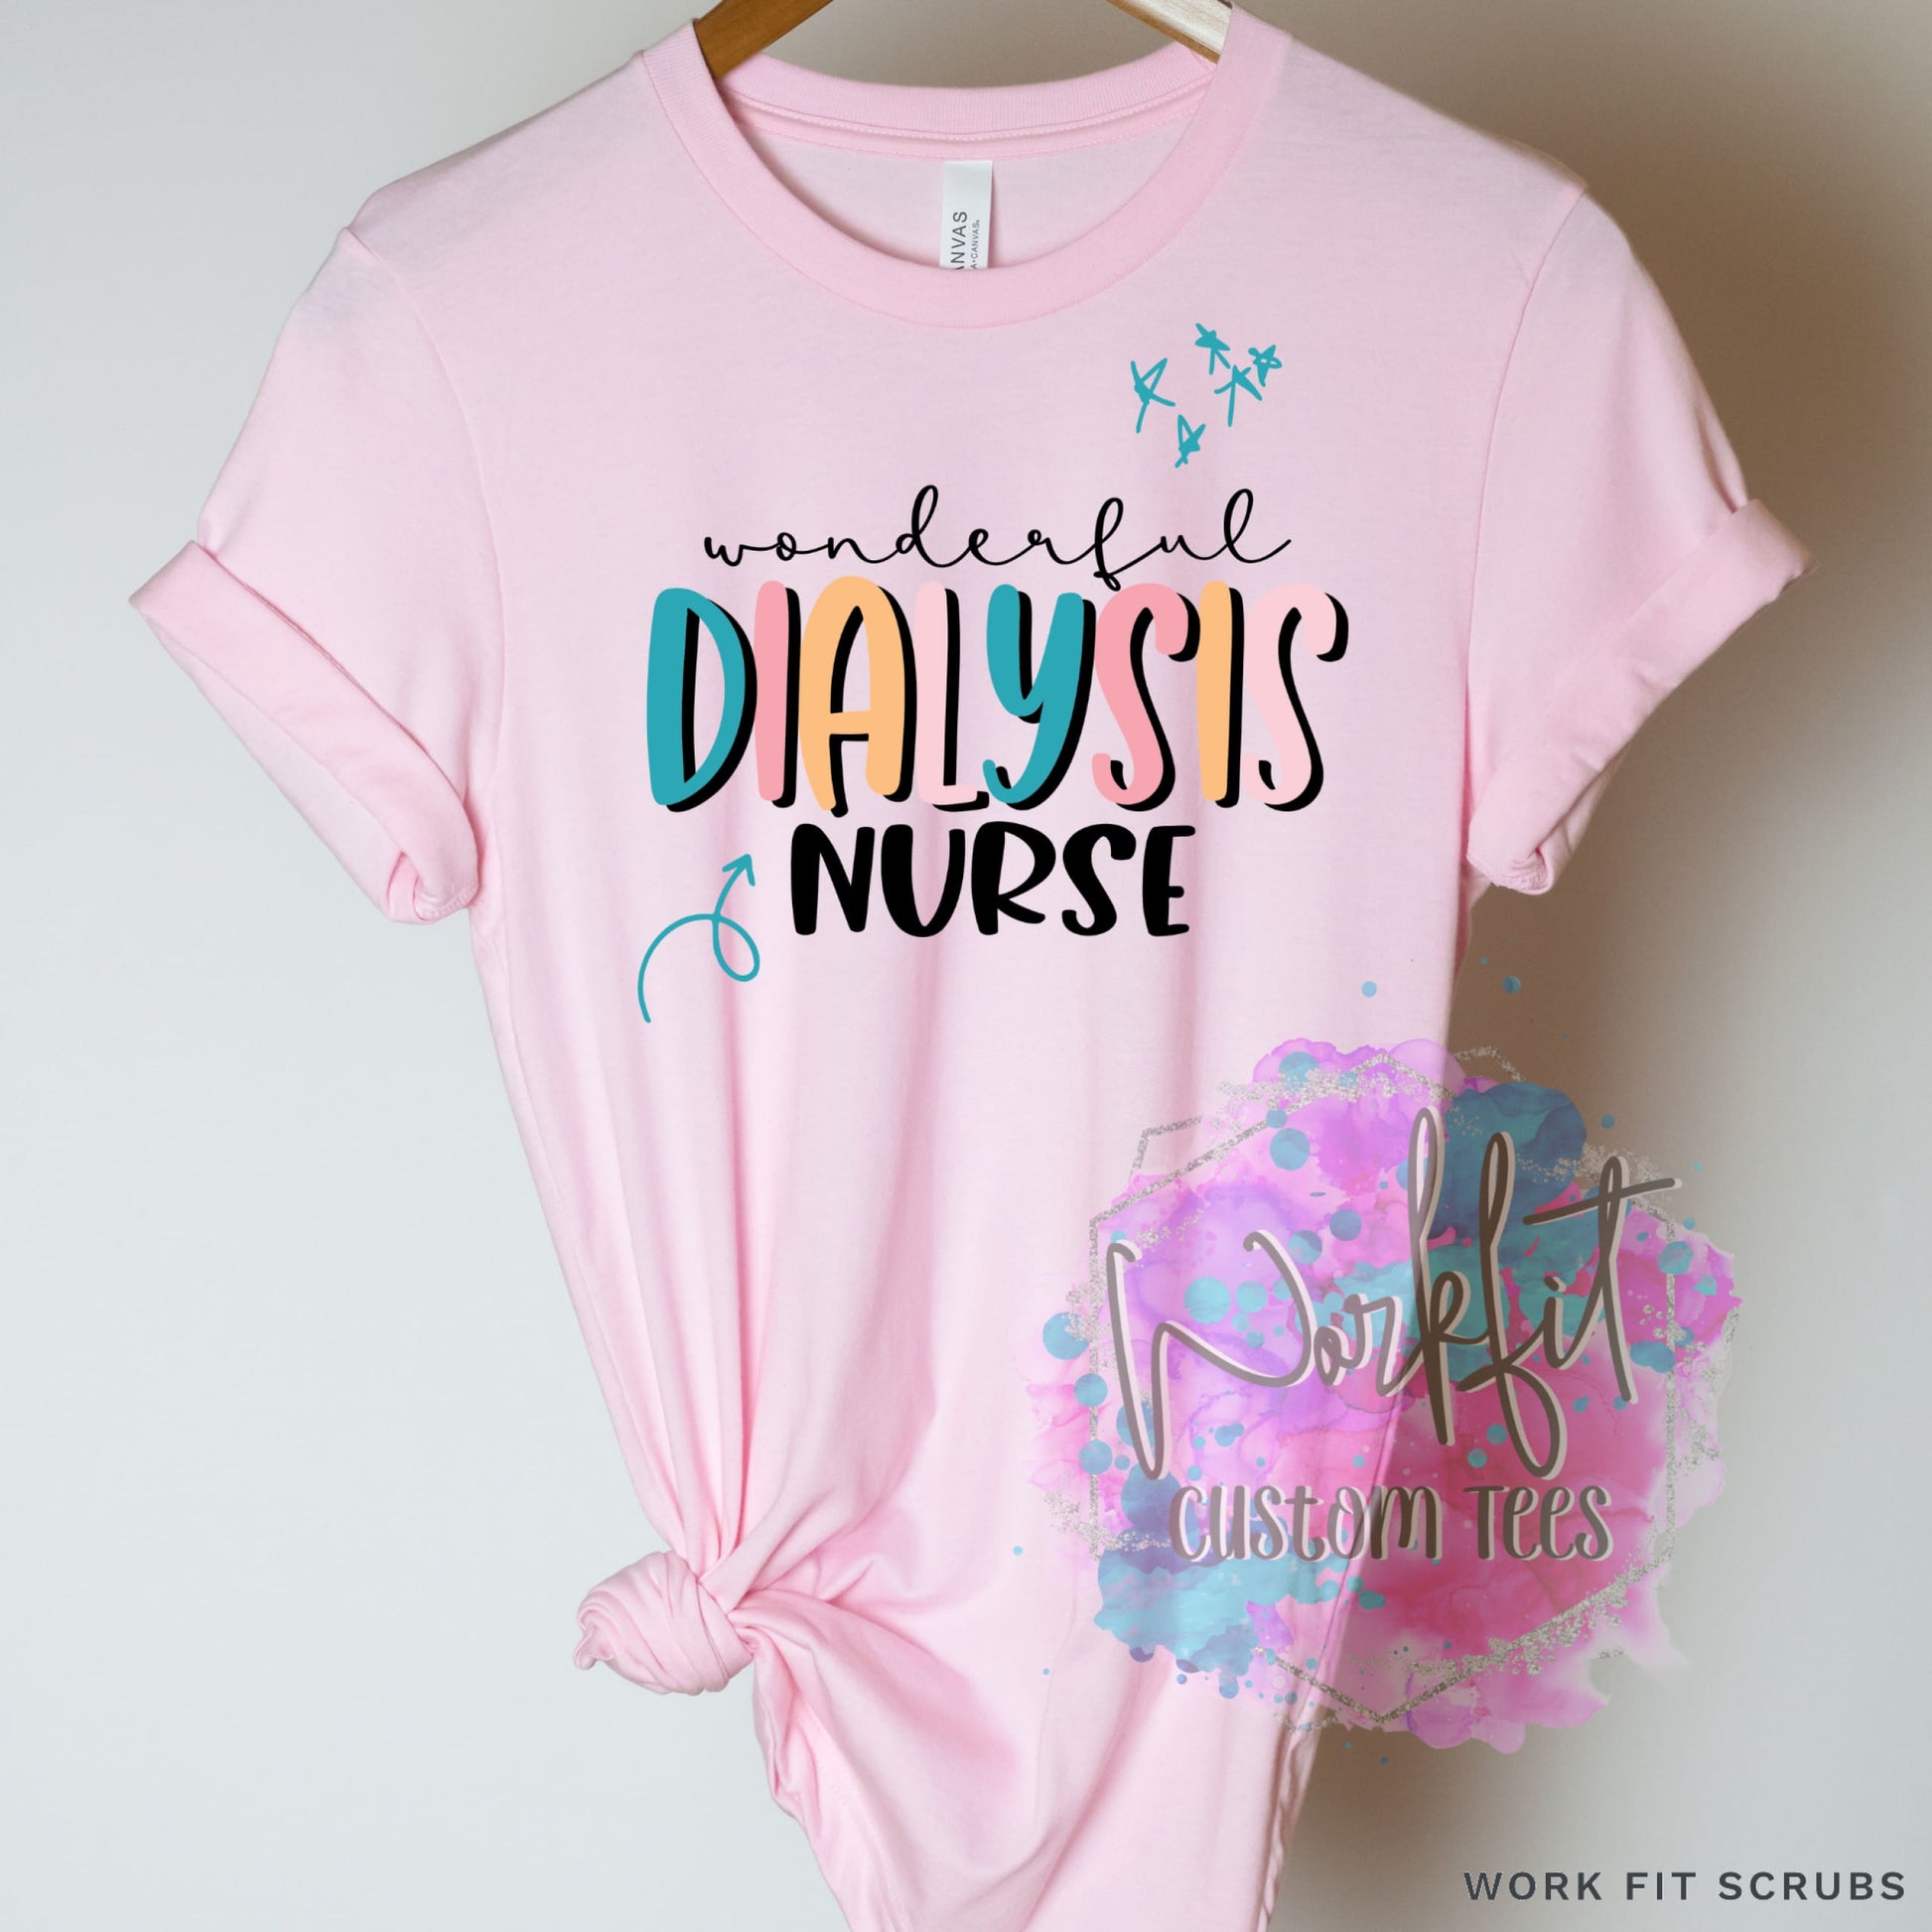 SHOP DTF CANADA - Nurse - Wonderful Dialysis.